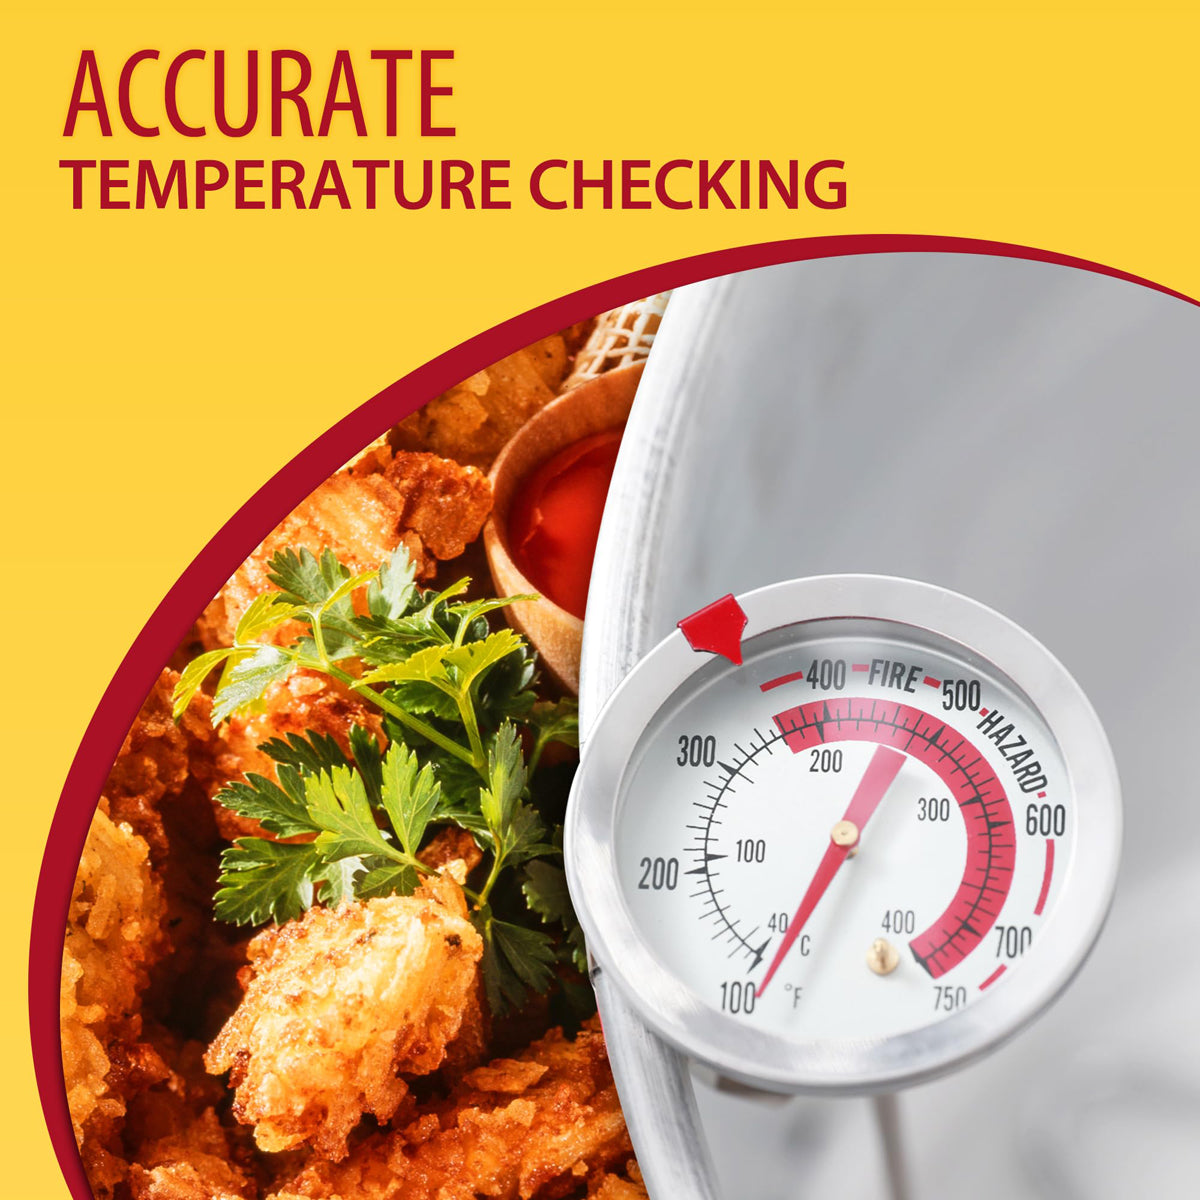 Accurate Temperature Checking